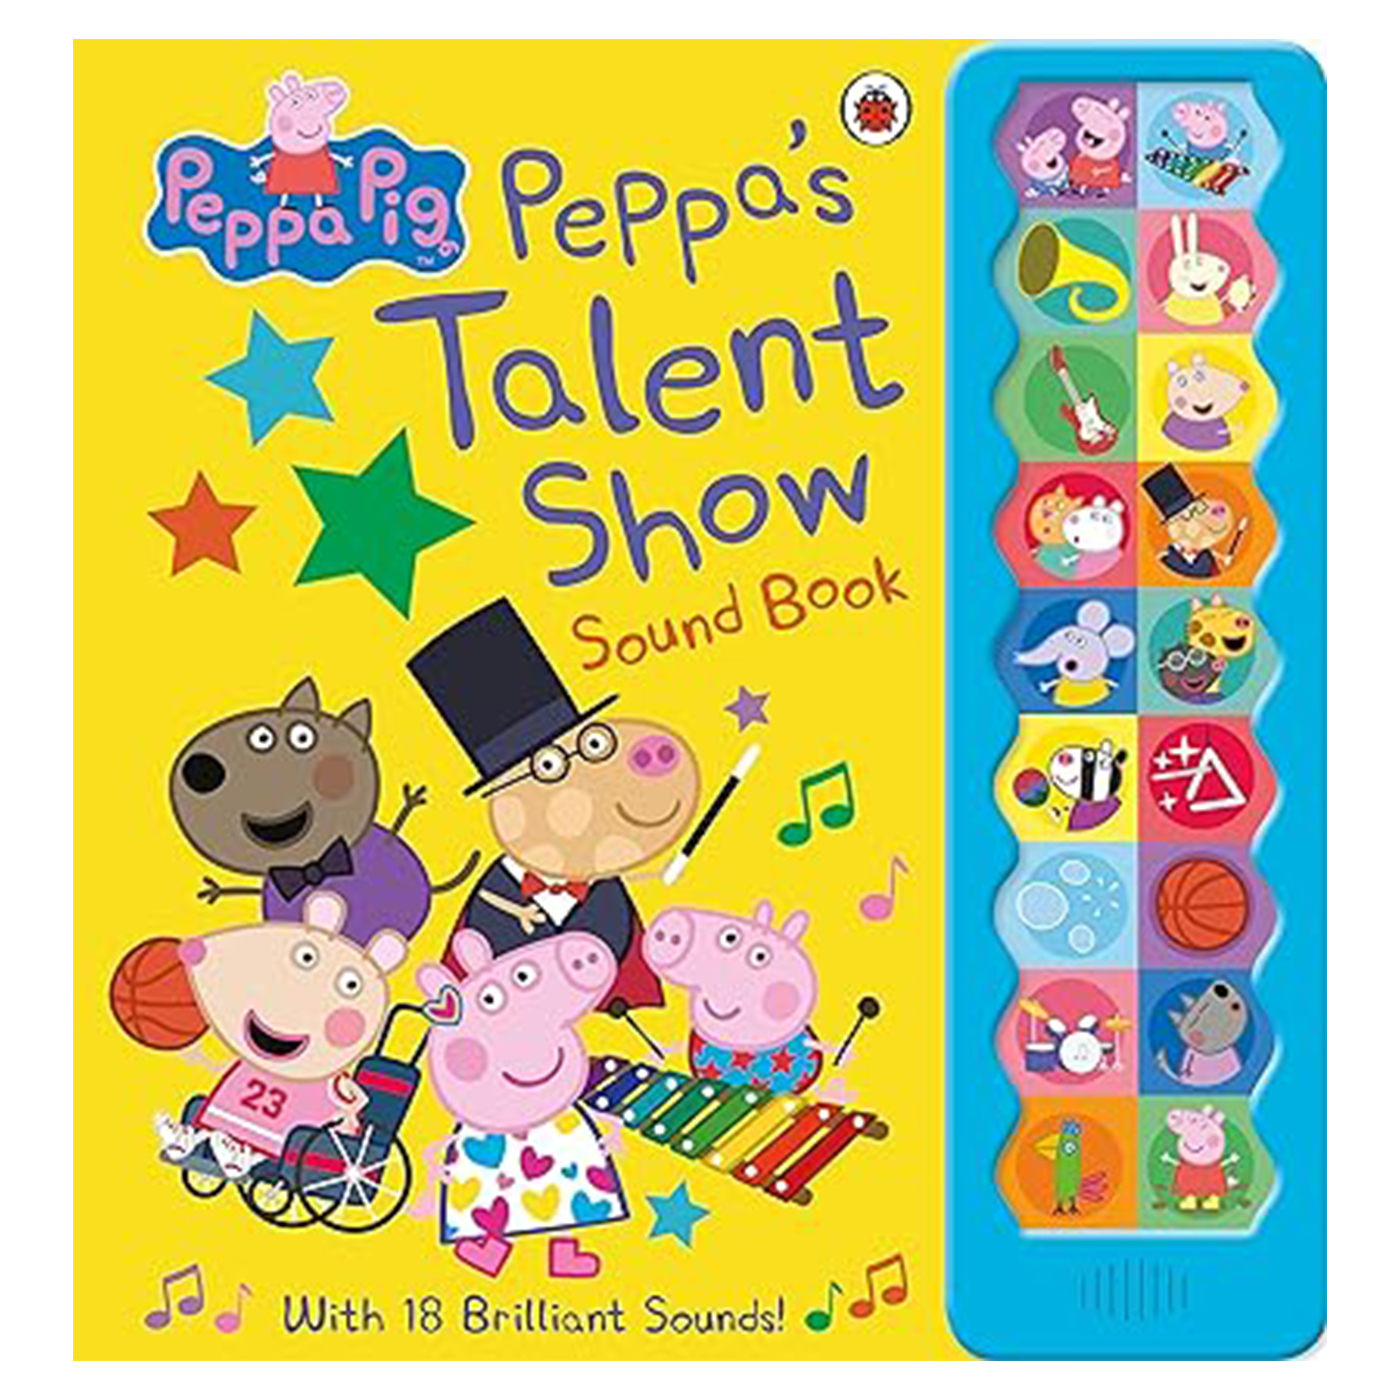  Peppa Pig Peppa's Talent Show Sound Book